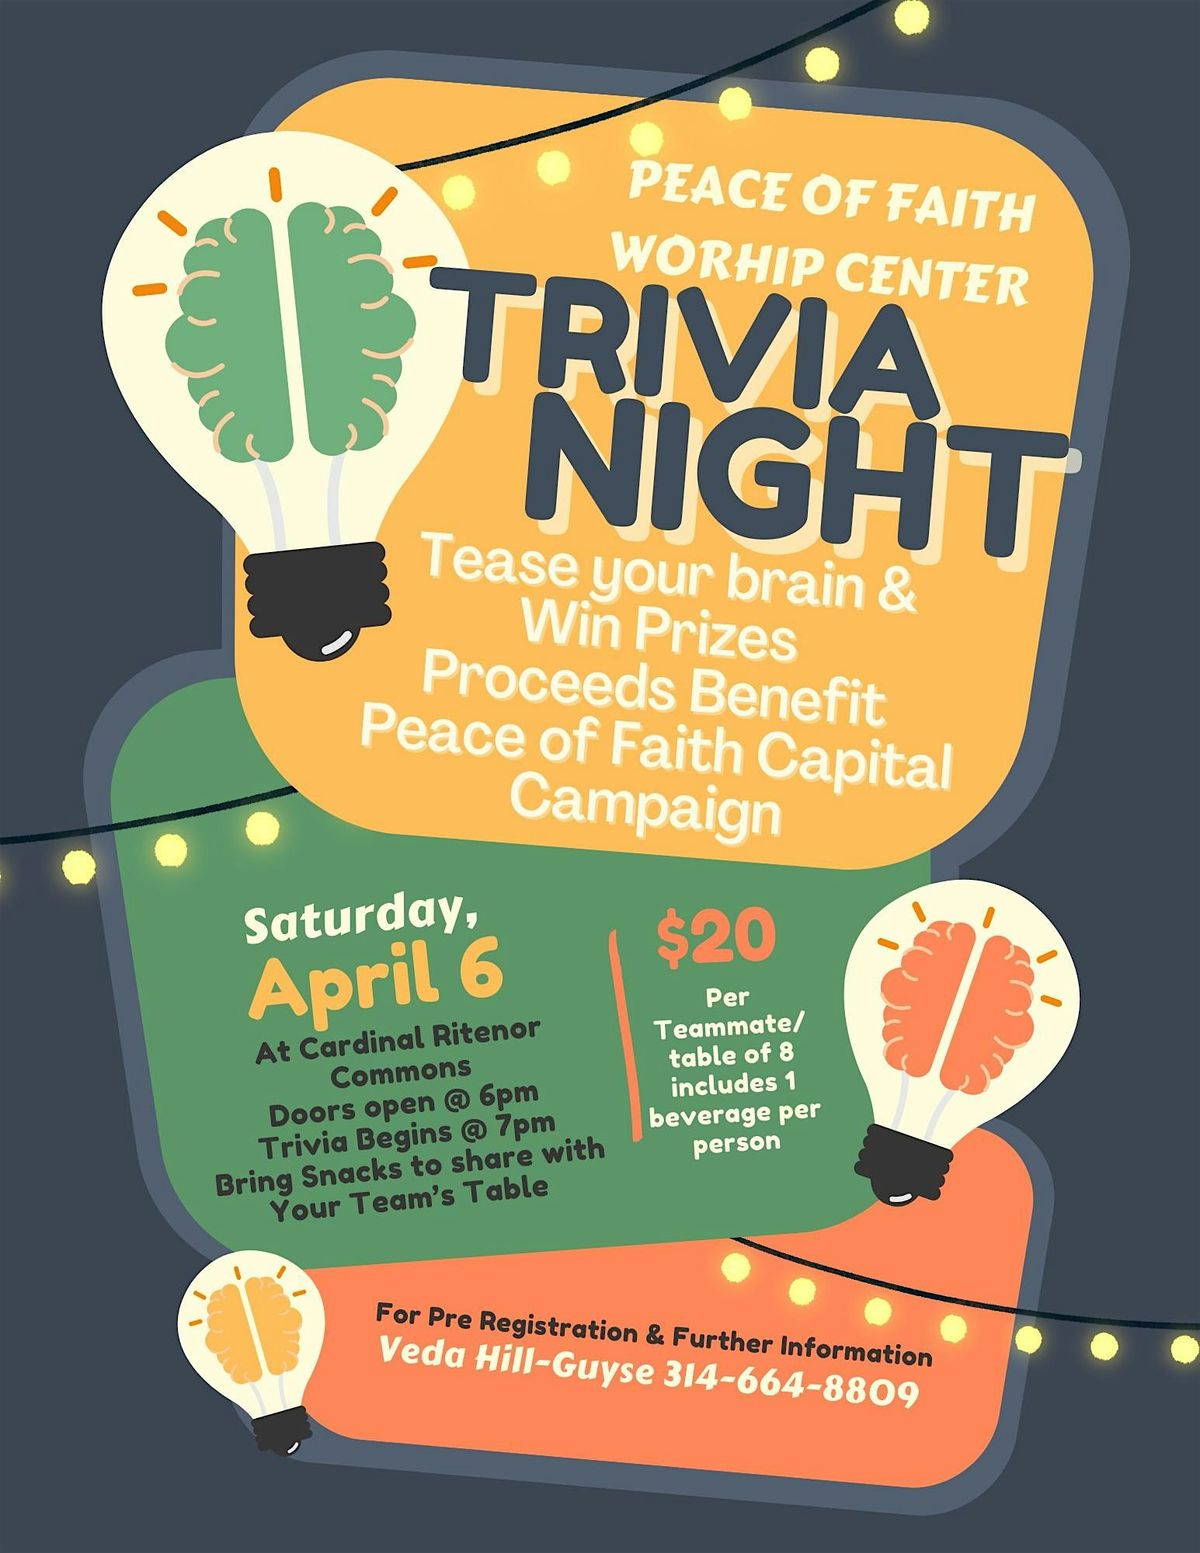 Peace of Faith Worship Center Trivia Night